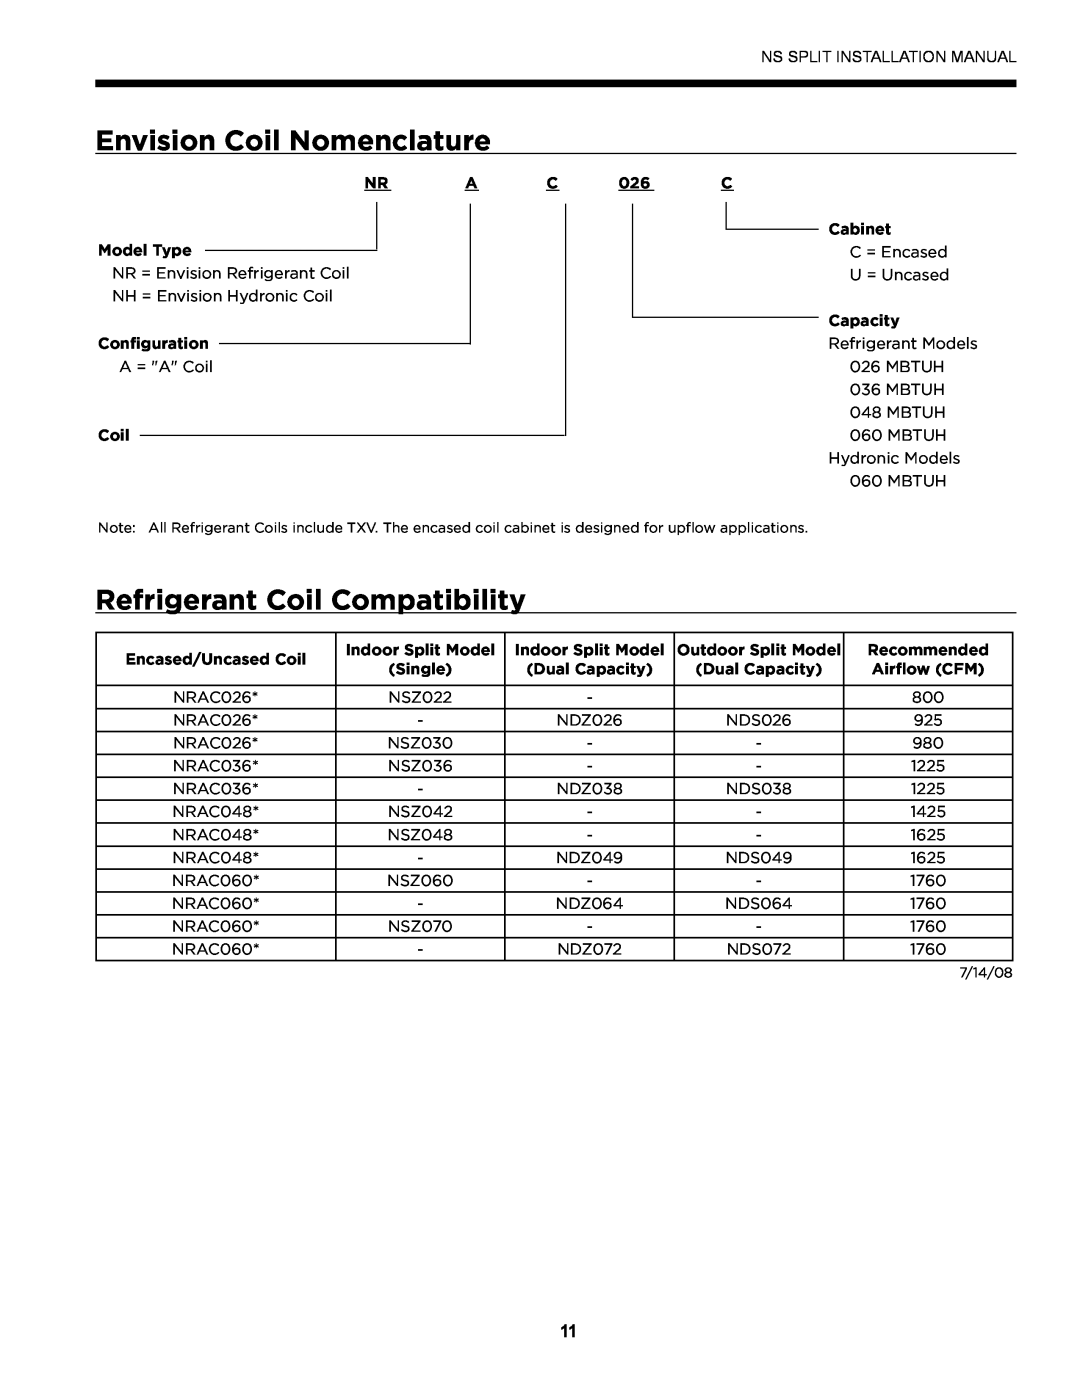 Envision Peripherals Series installation manual Envision Coil Nomenclature, Refrigerant Coil Compatibility 